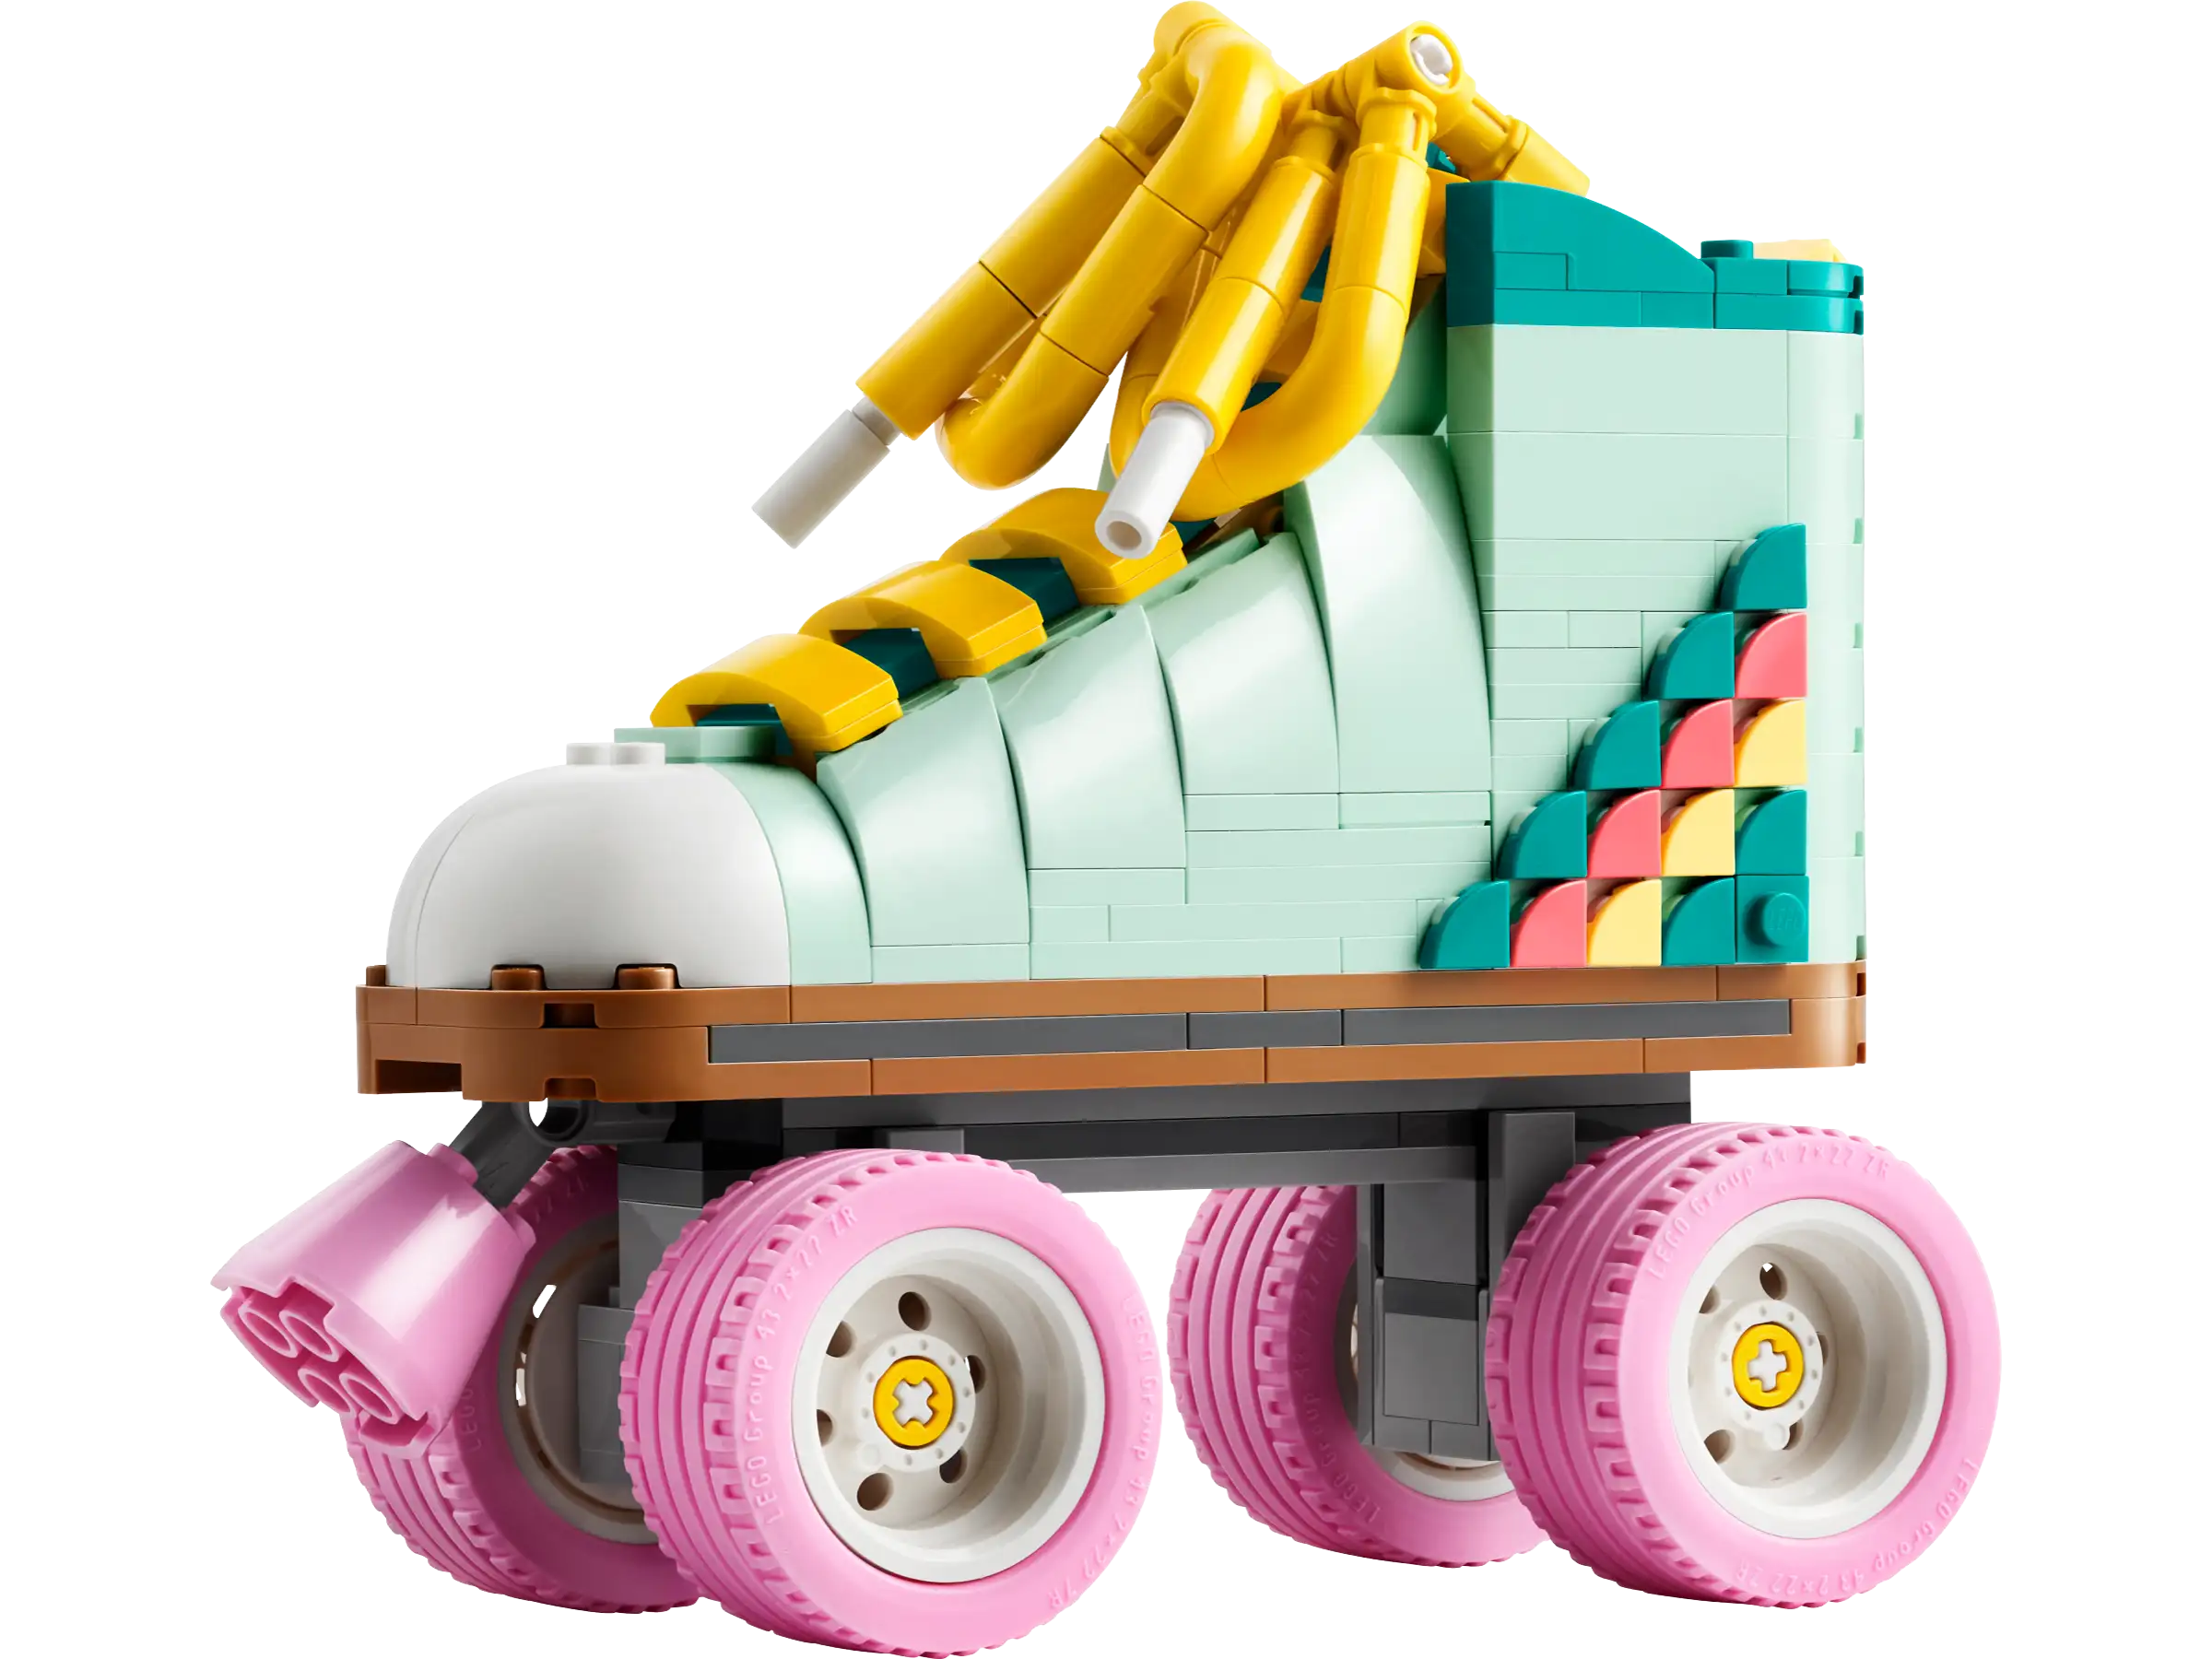 Lego - The retro roller skate